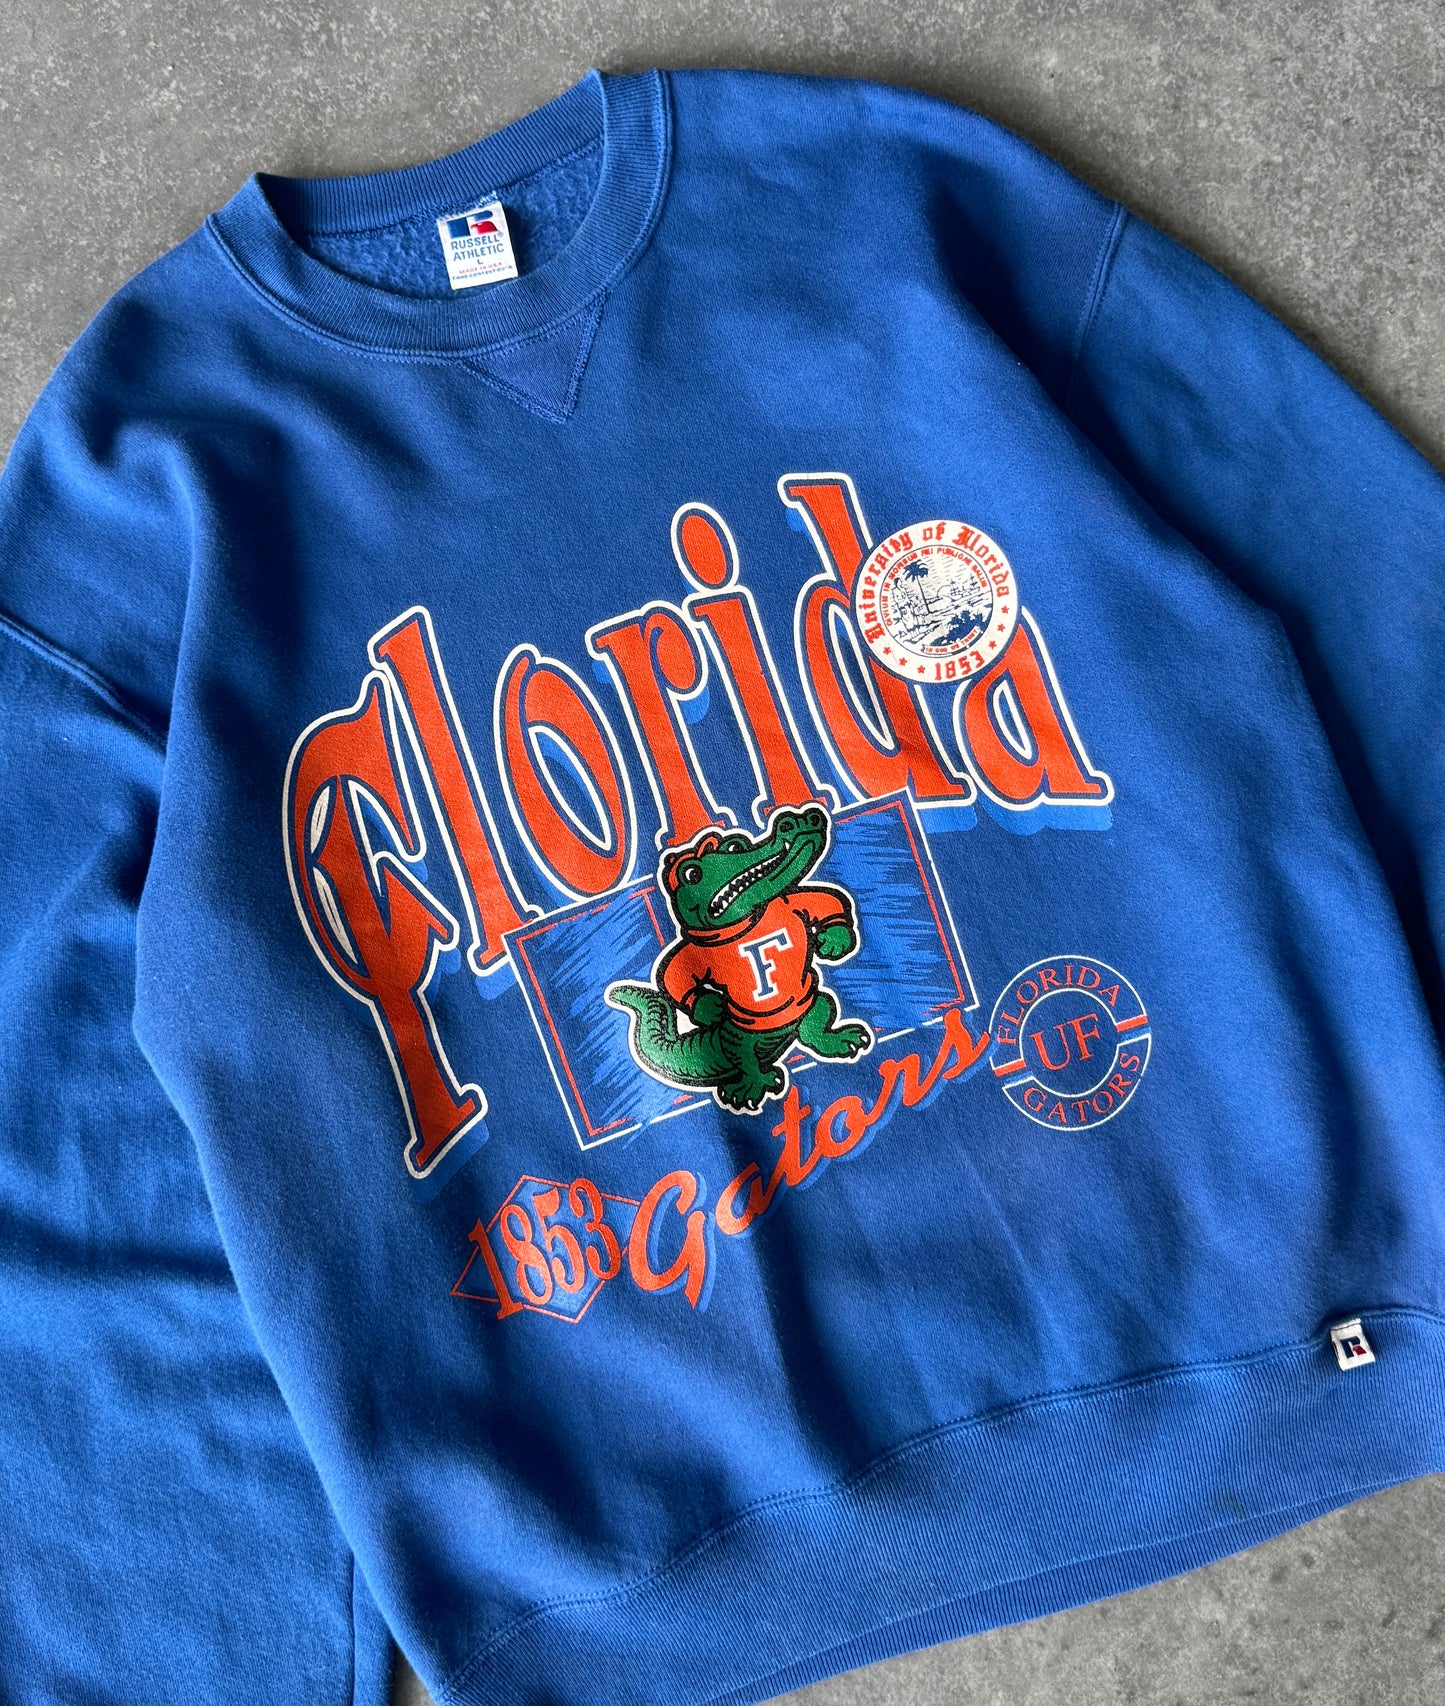 Vintage 90s Florida Gators Sweater (L)